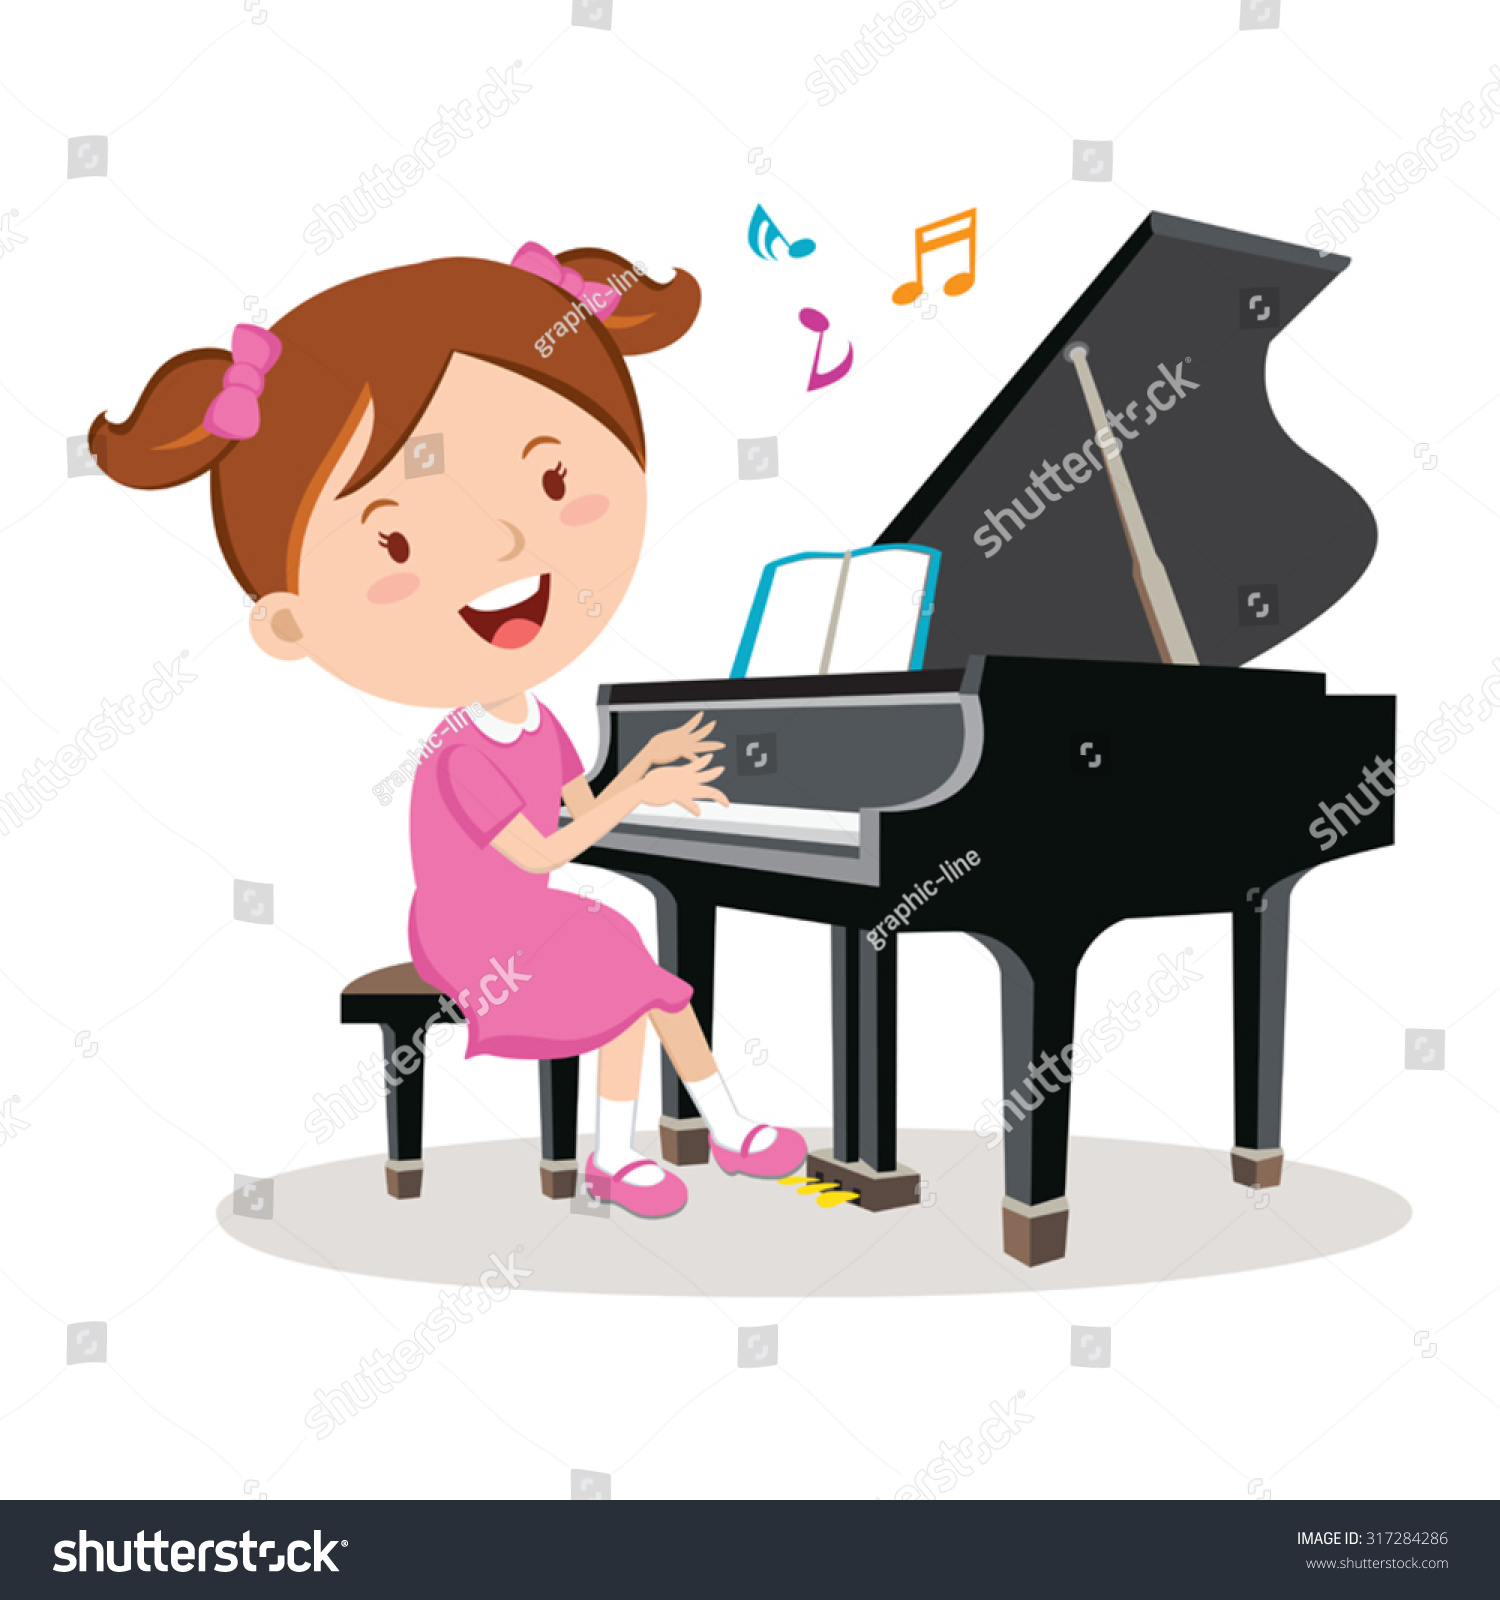 He can play piano. Профессия пианист для детей. Пианист рисунок. Пианист мультяшный. Играет на фортепиано.